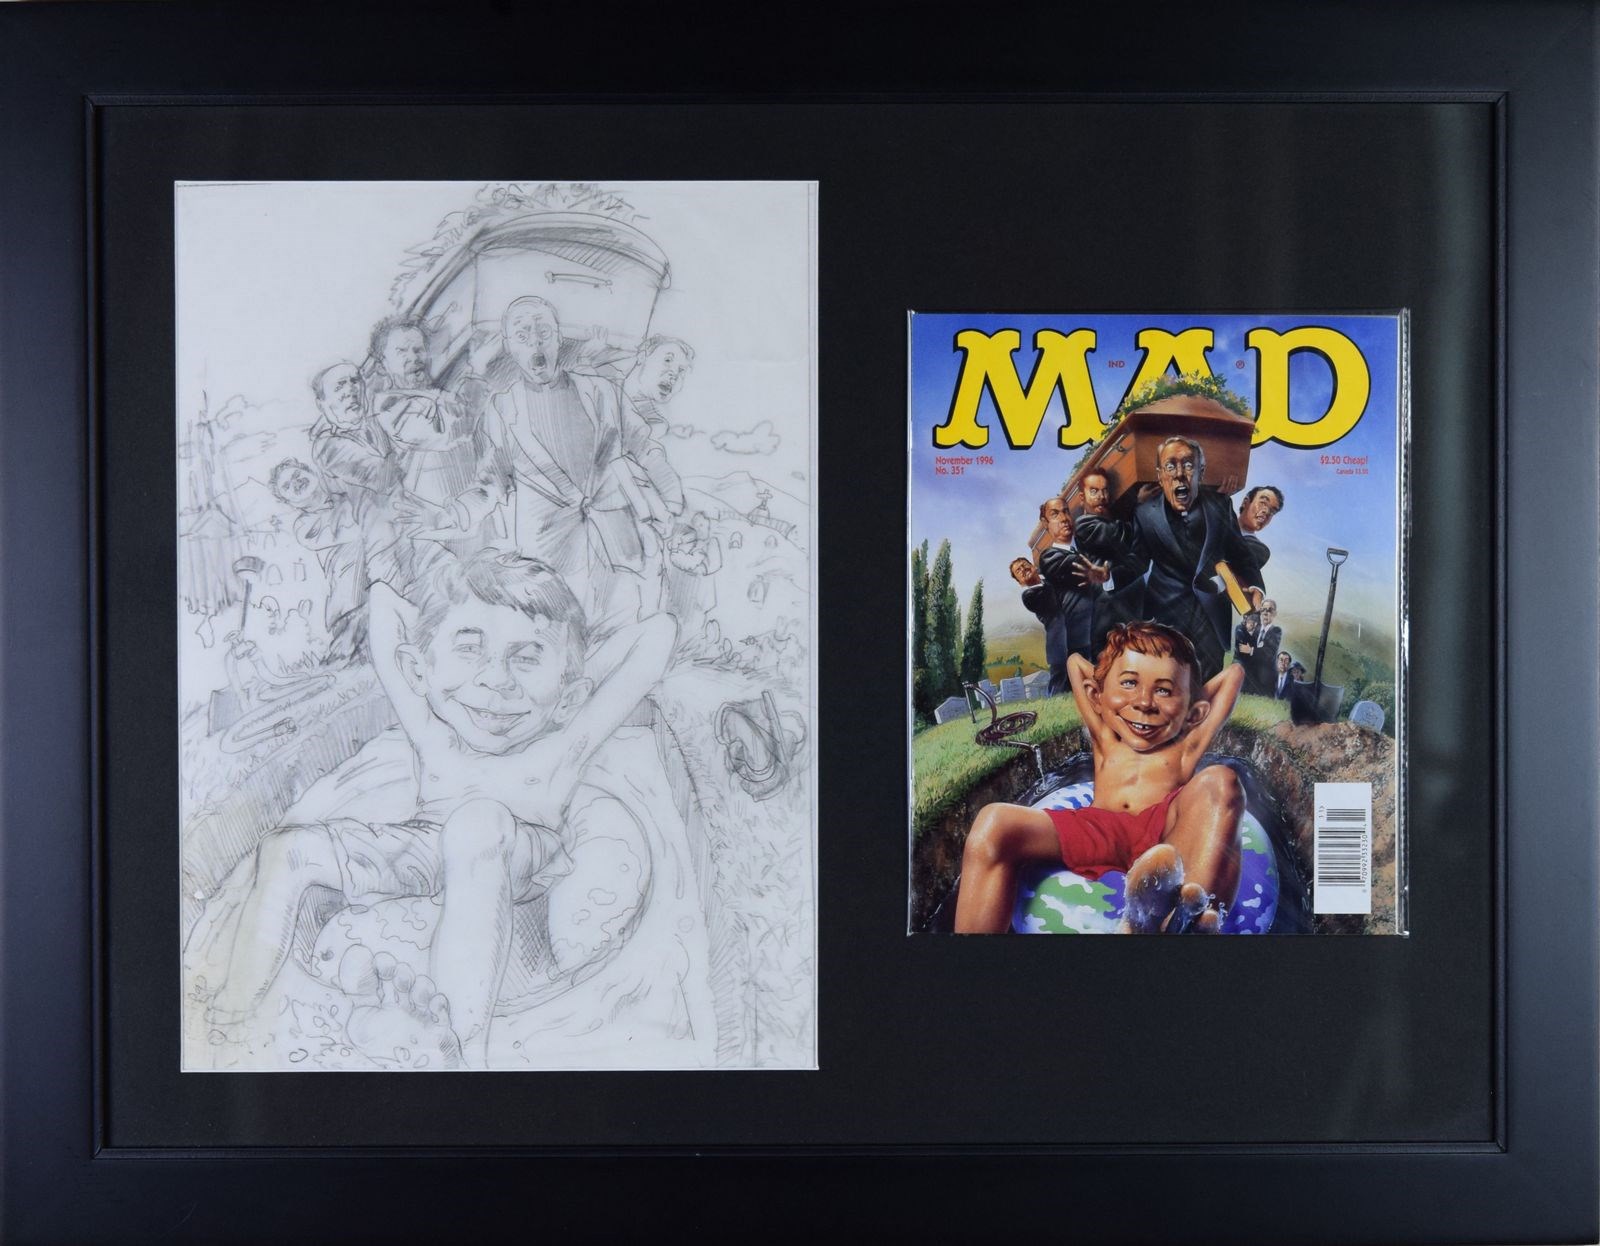 - MAD Magazine Original Art Preliminary Drawing - Alfred E. Neuman at the Cemetery, MAD #351 by Mark Fredrickson, November 1996.